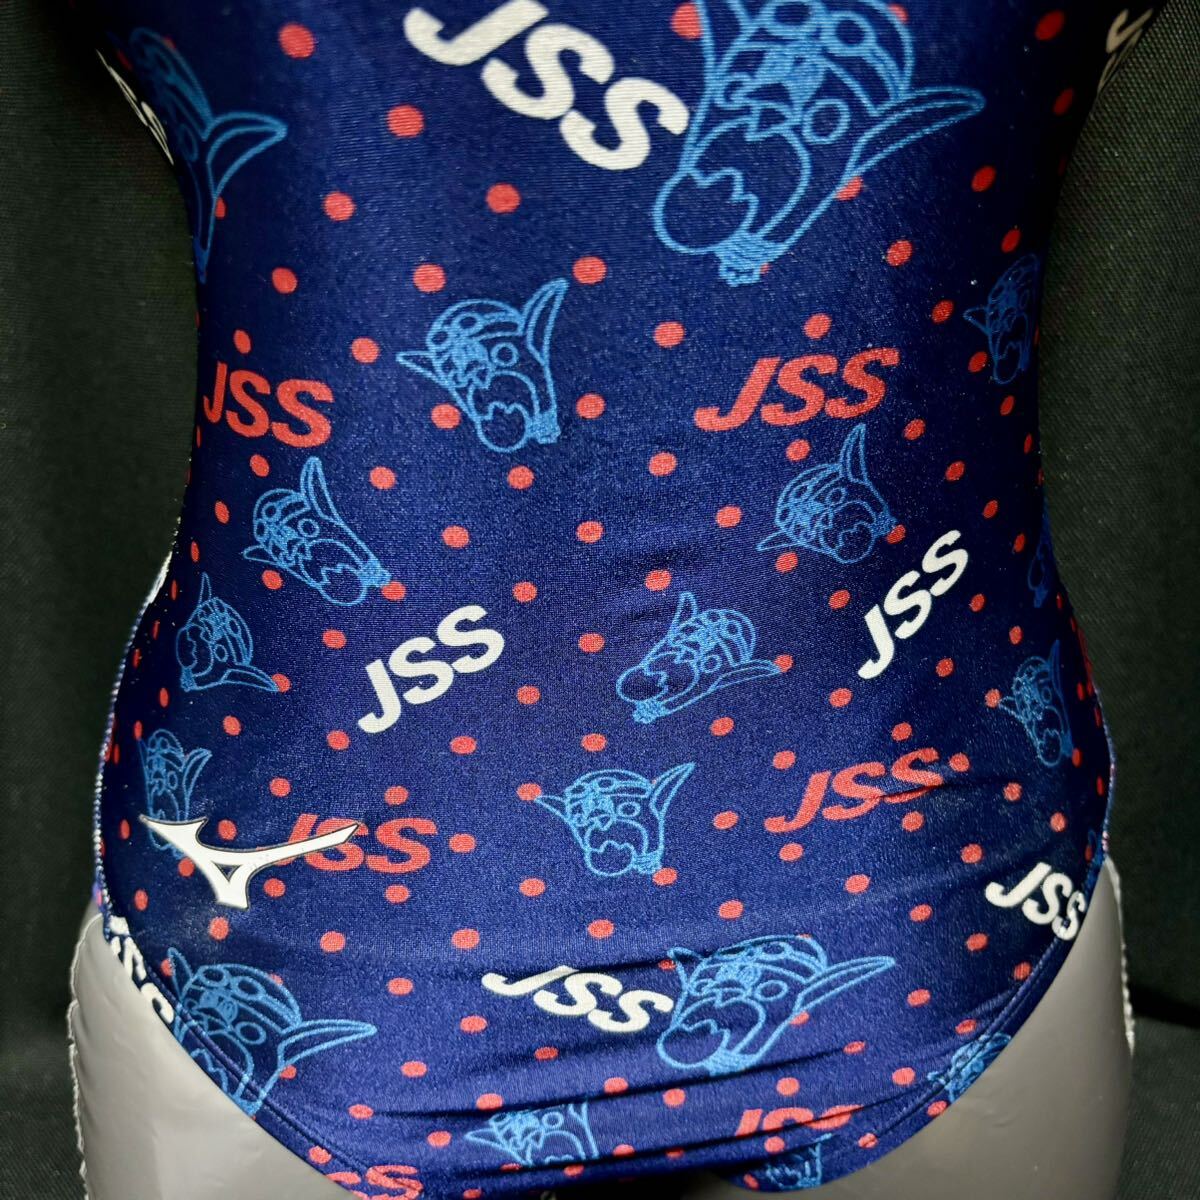 JSS 指定水着 女子 Mサイズ 成人用サイズ MIZUNO ミズノ 競泳水着 スコーパー ジェイエスエス スイミングスクールの画像5